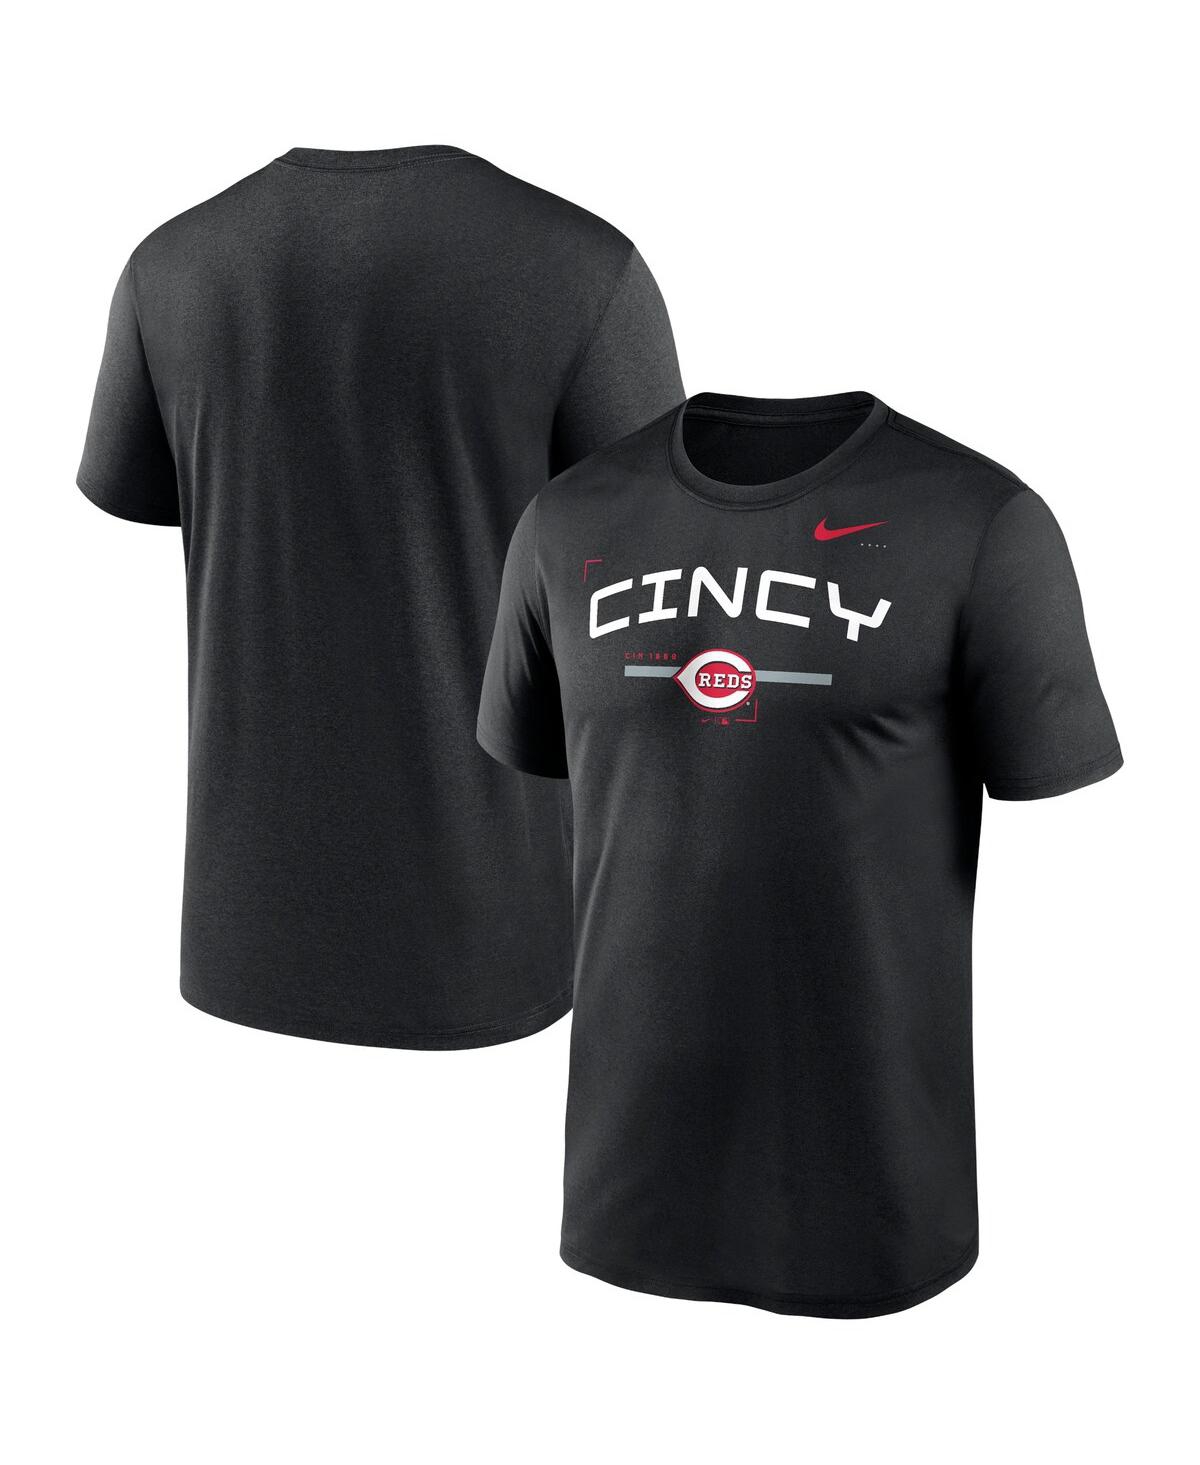 Men's Boston Red Sox Nike Navy Wordmark Legend Performance Big & Tall  T-Shirt